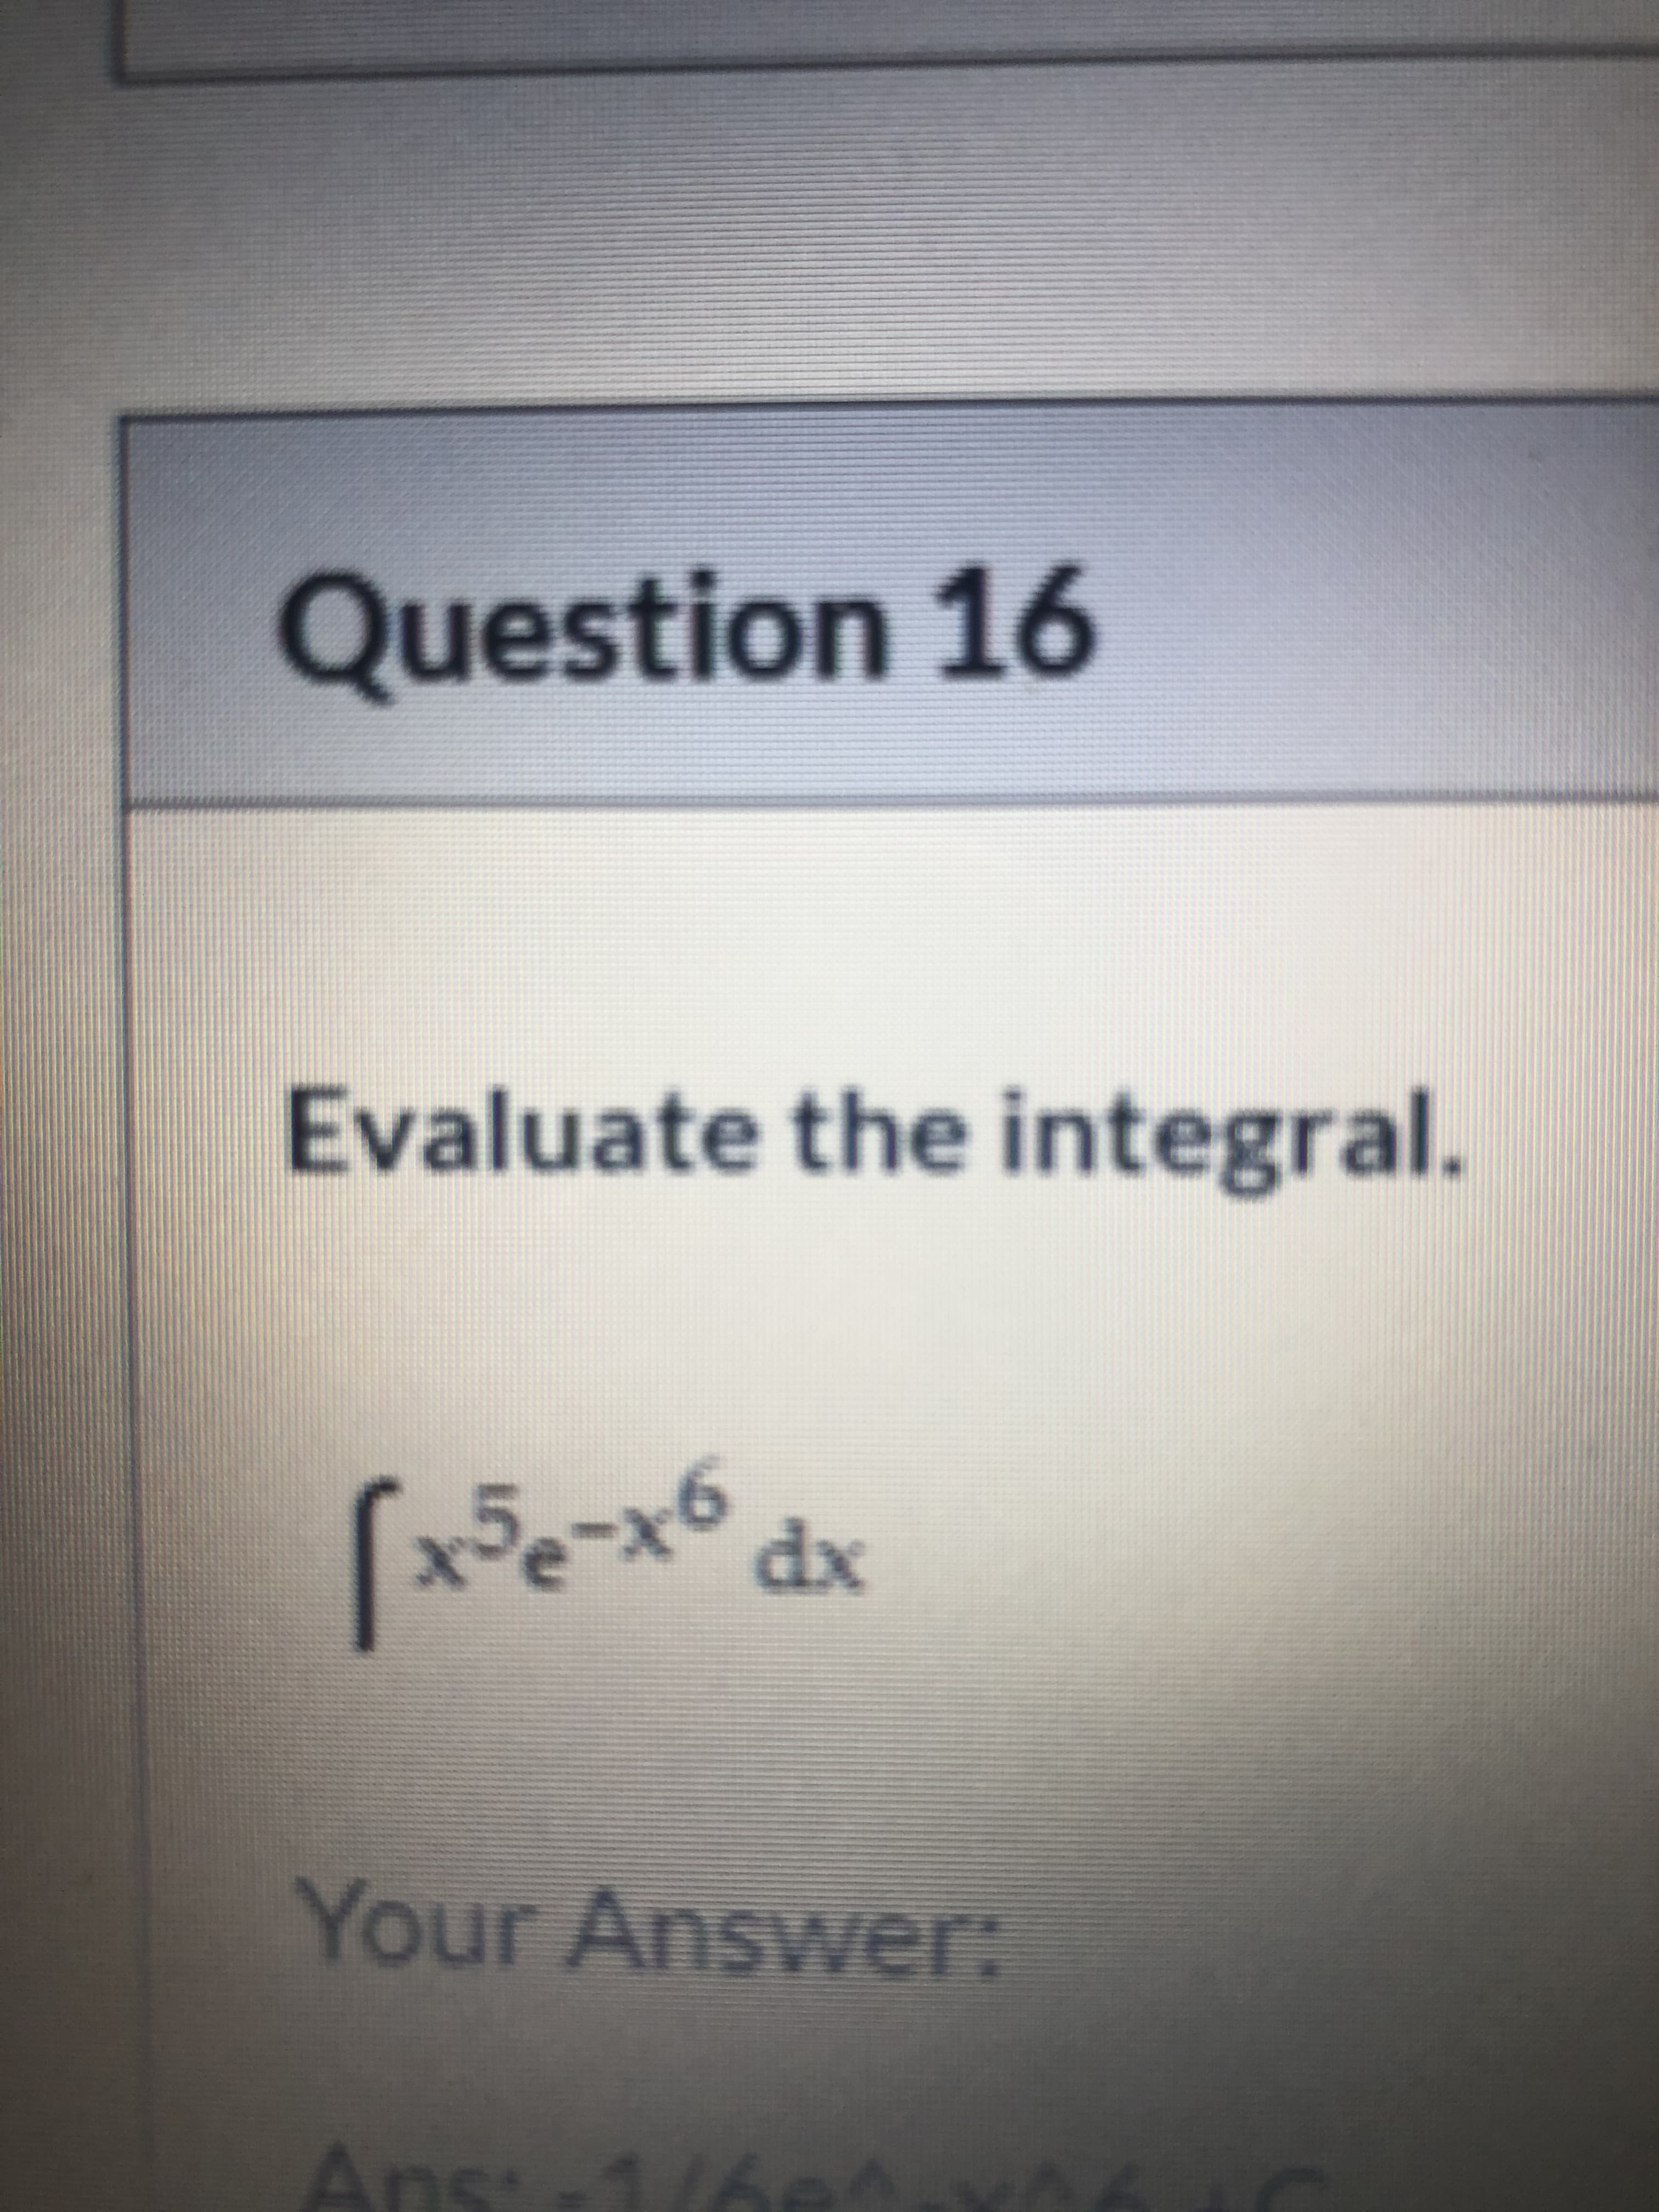 e the integral.
dx
